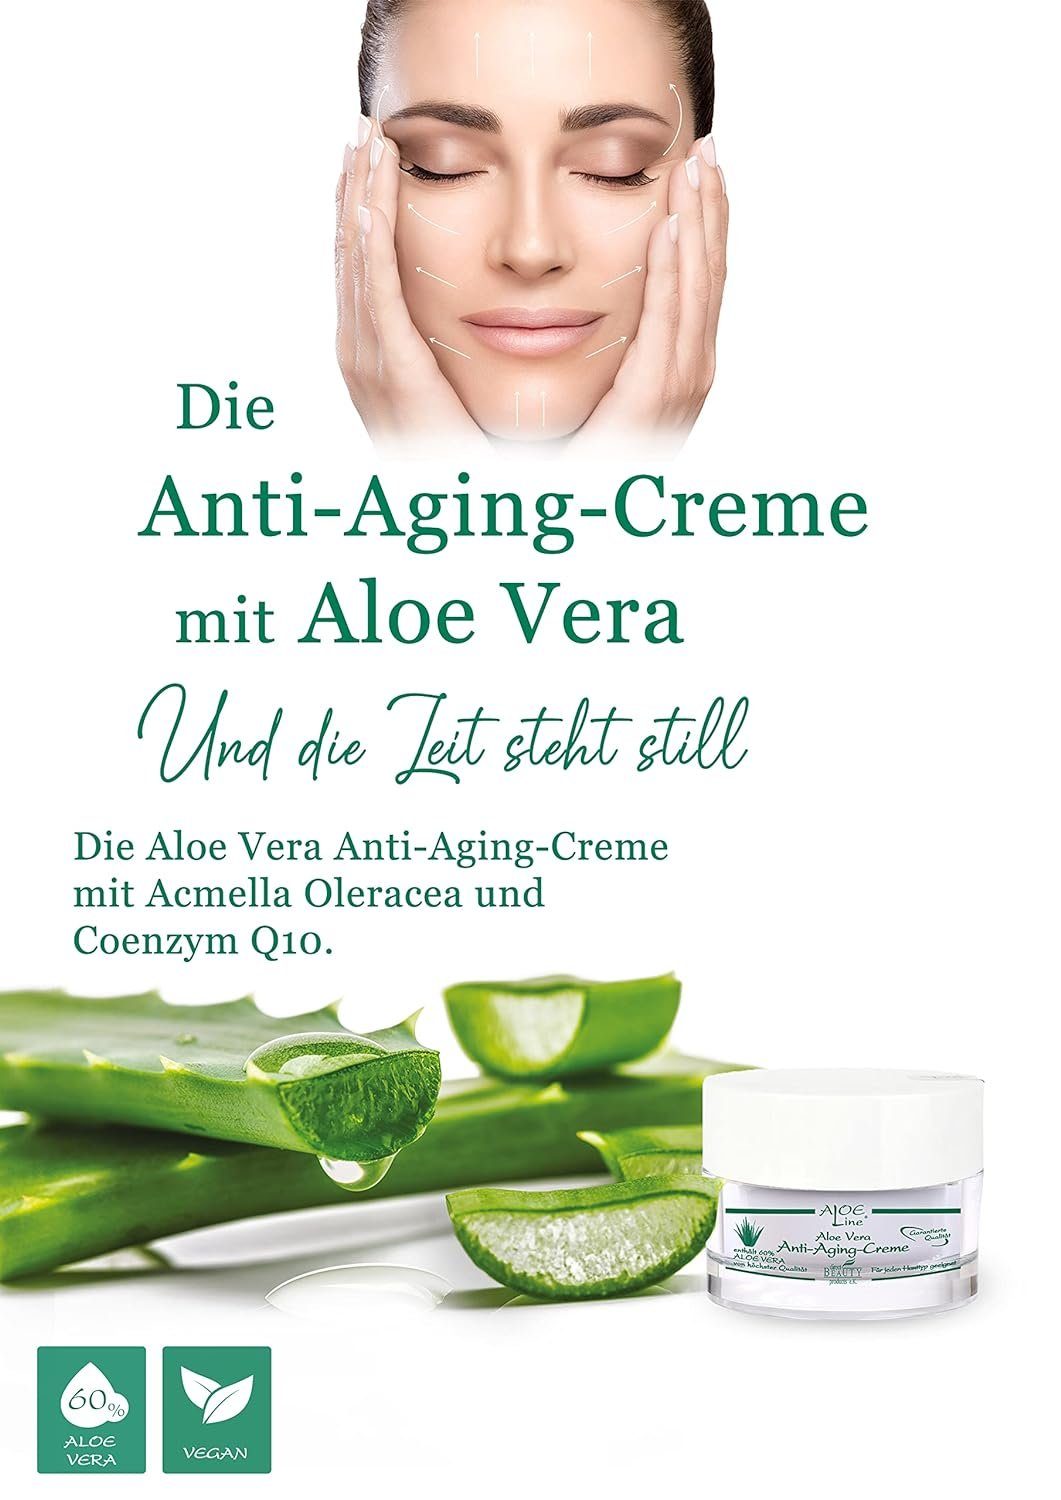 24h Bio Vera, Aging Anti ALOE Anti-Aging-Creme Gesichtscreme Line mit 60% 50ml Aloe Vera Aloe